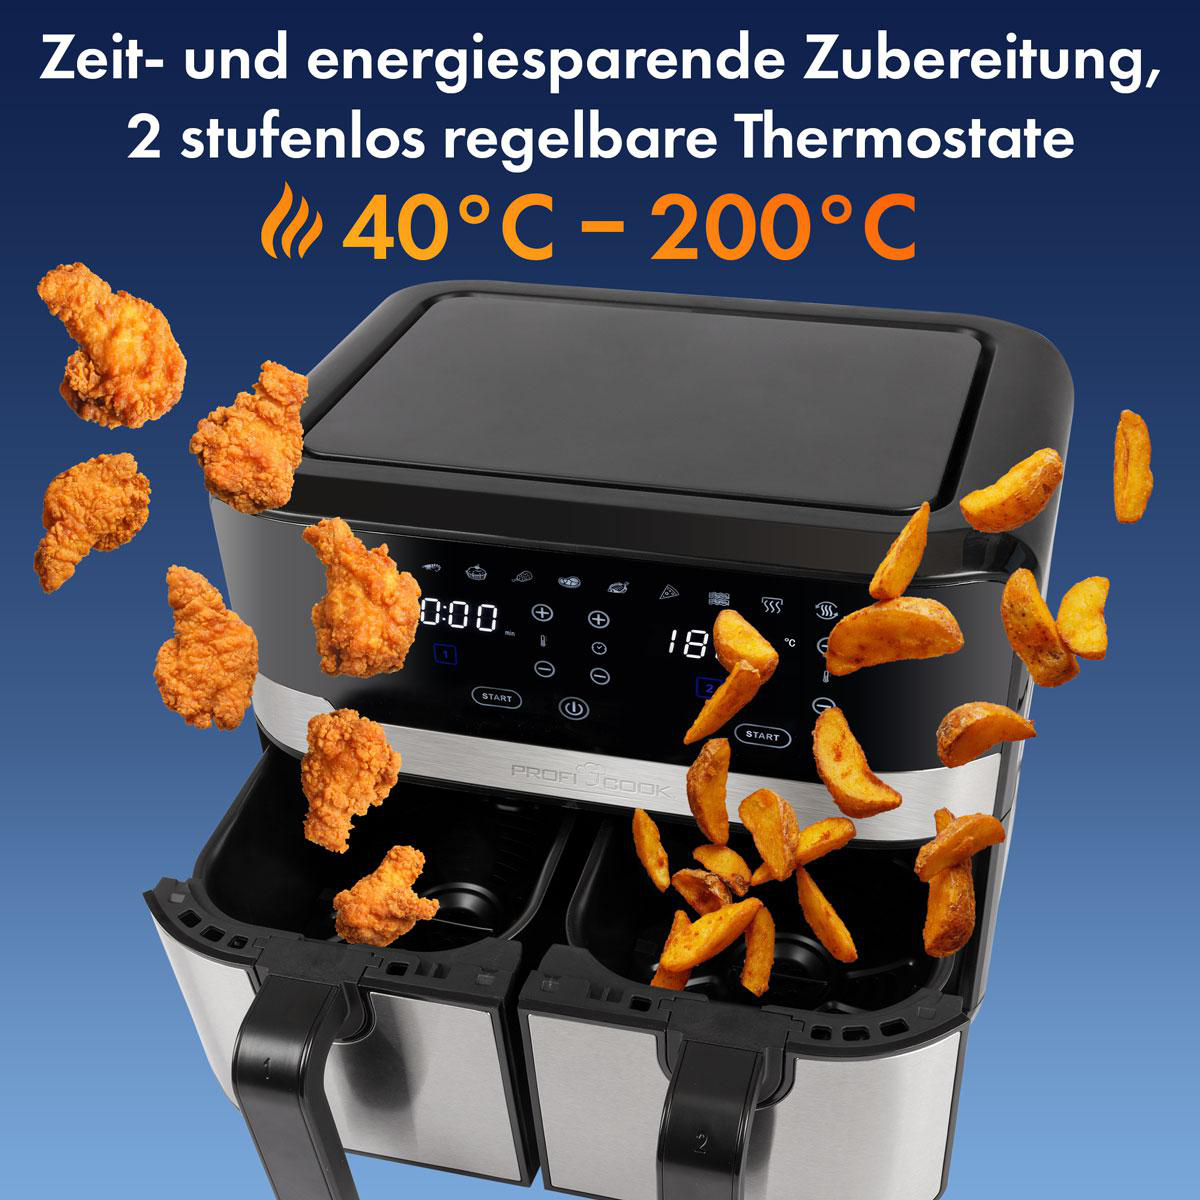 PROFICOOK PC-FR 1242 H Heißluftfritteuse Watt 2400 Schwarz/Edelstahl